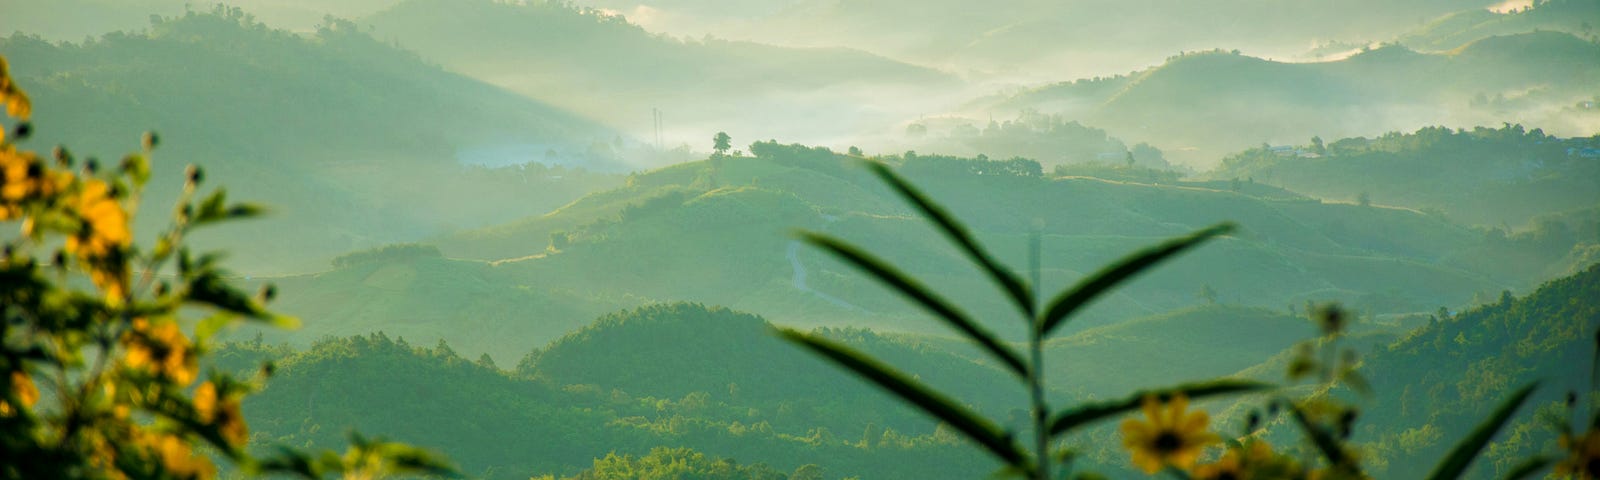 a peaceful hilly vista